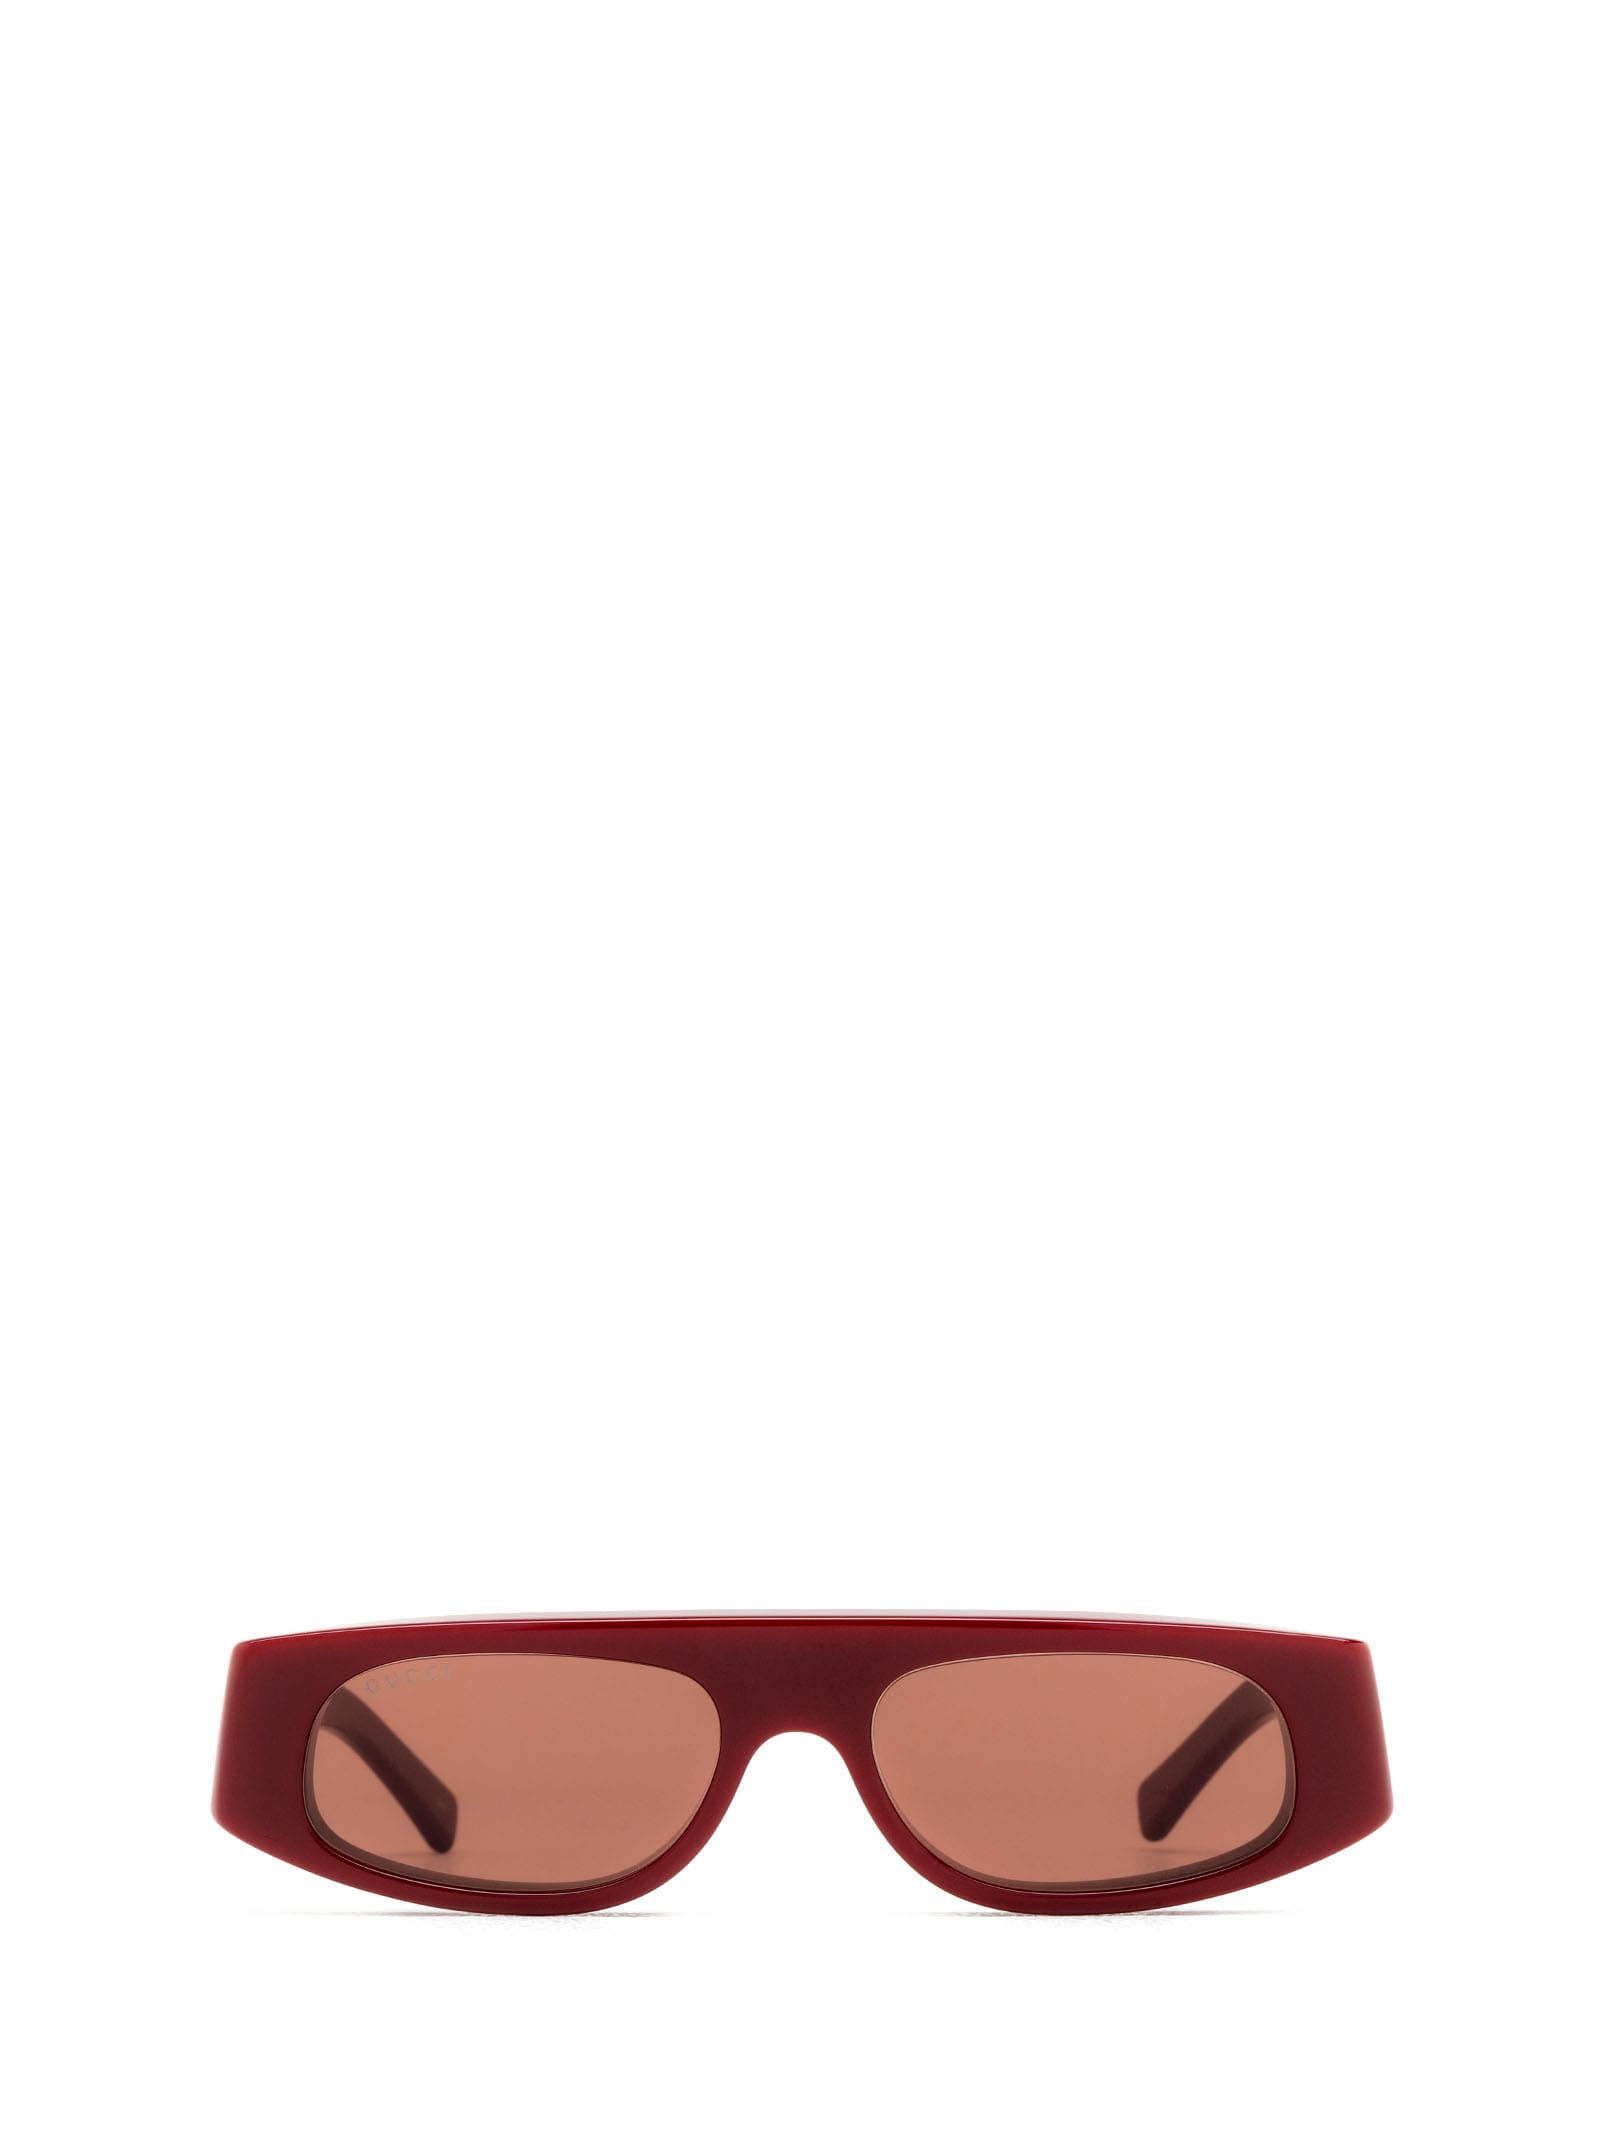 Gg1771s Gucci Lido 003 Burgundy Sunglasses